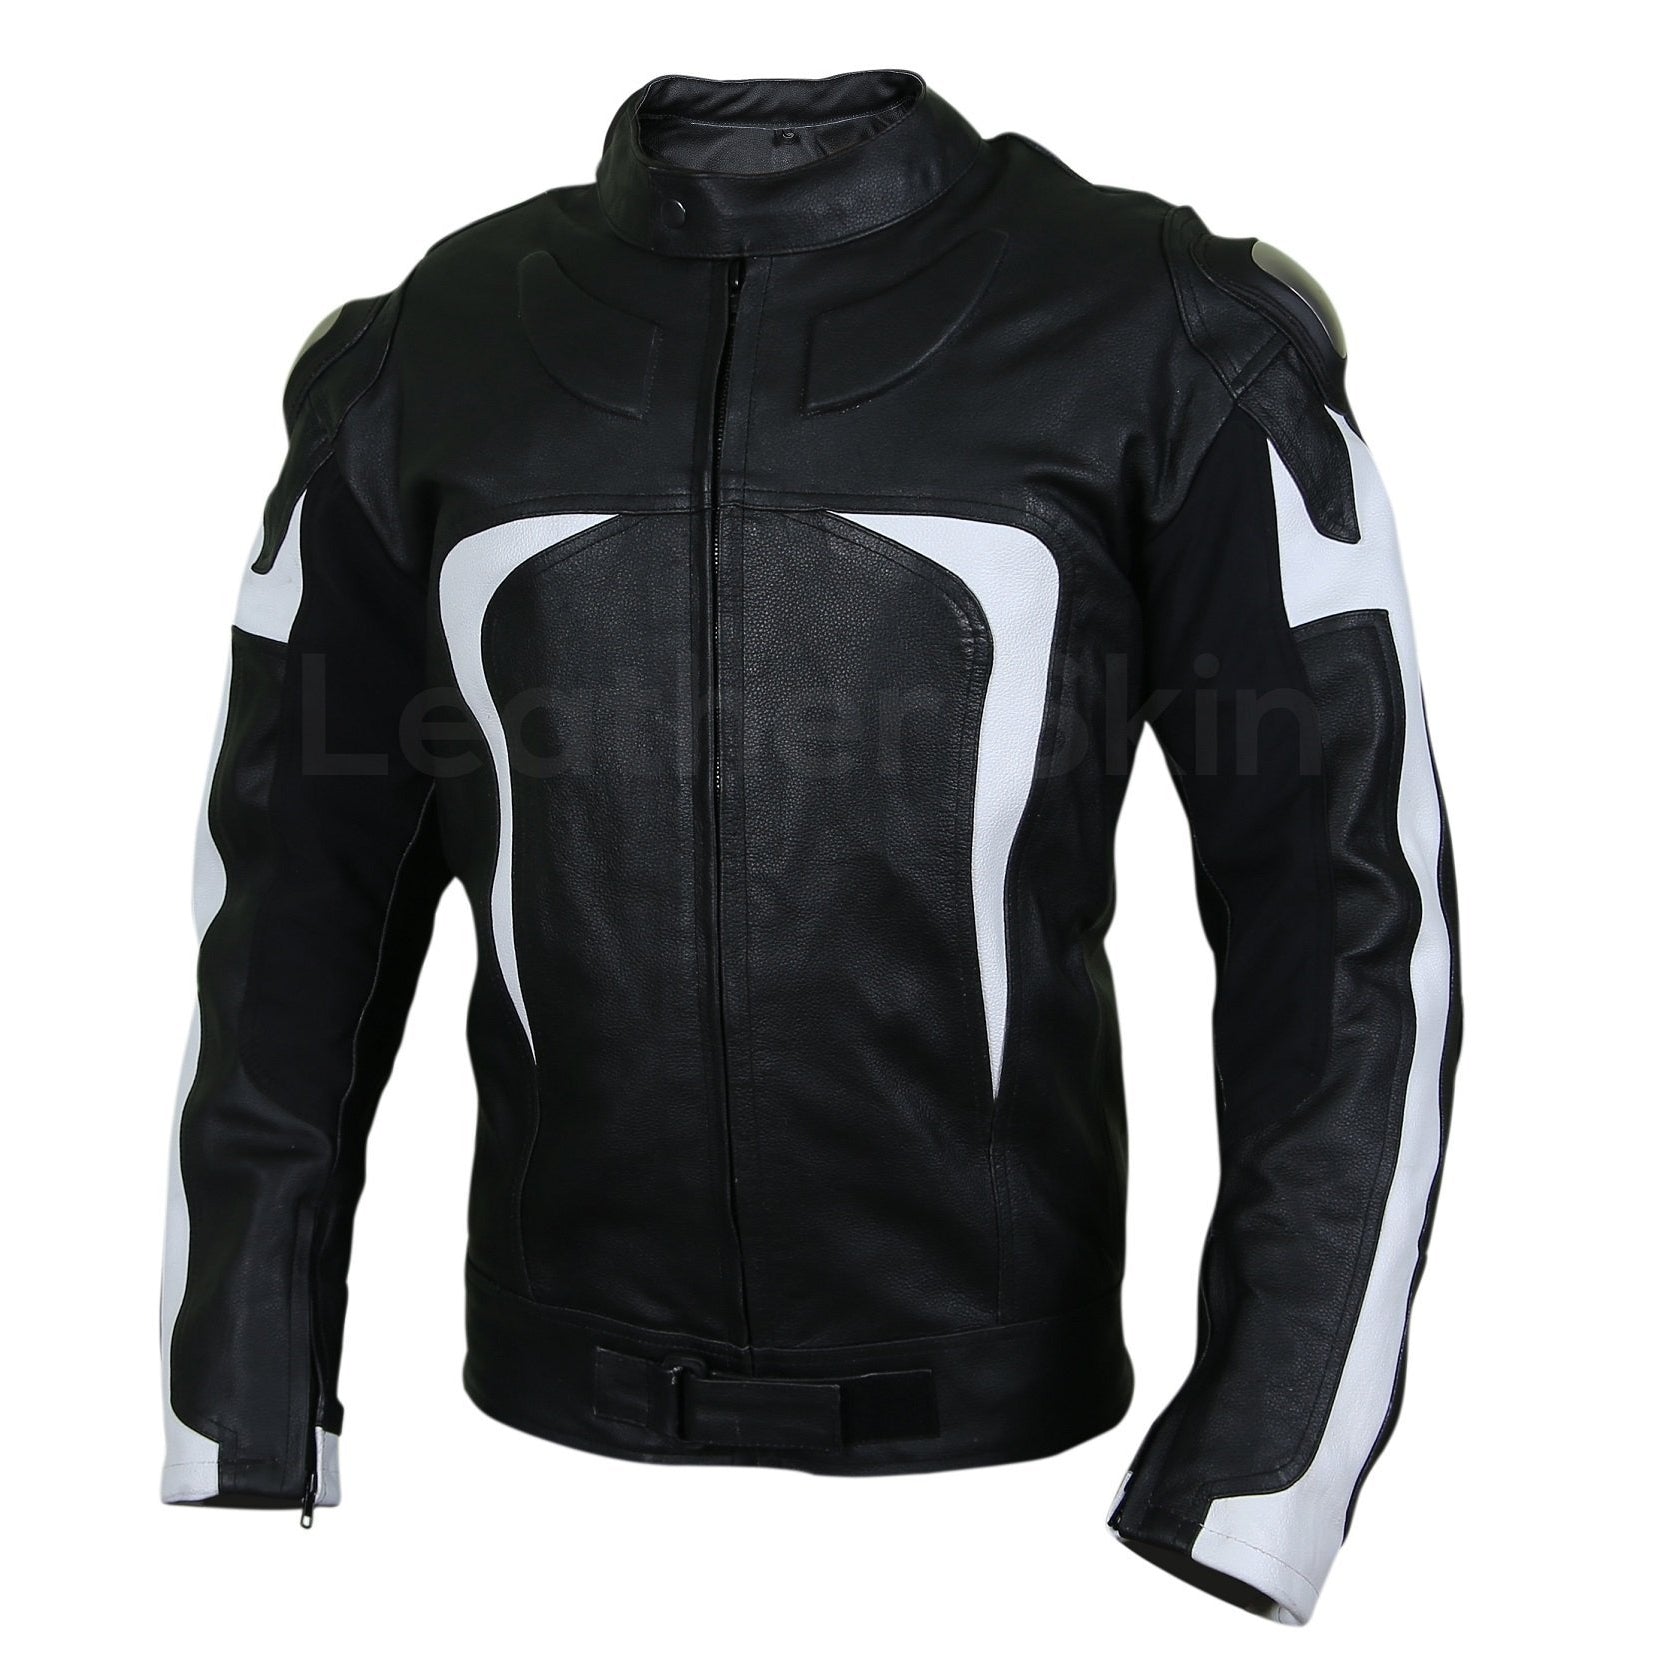 Men Black Brando Motorcycle Leather Jacket with shoulder epaulets